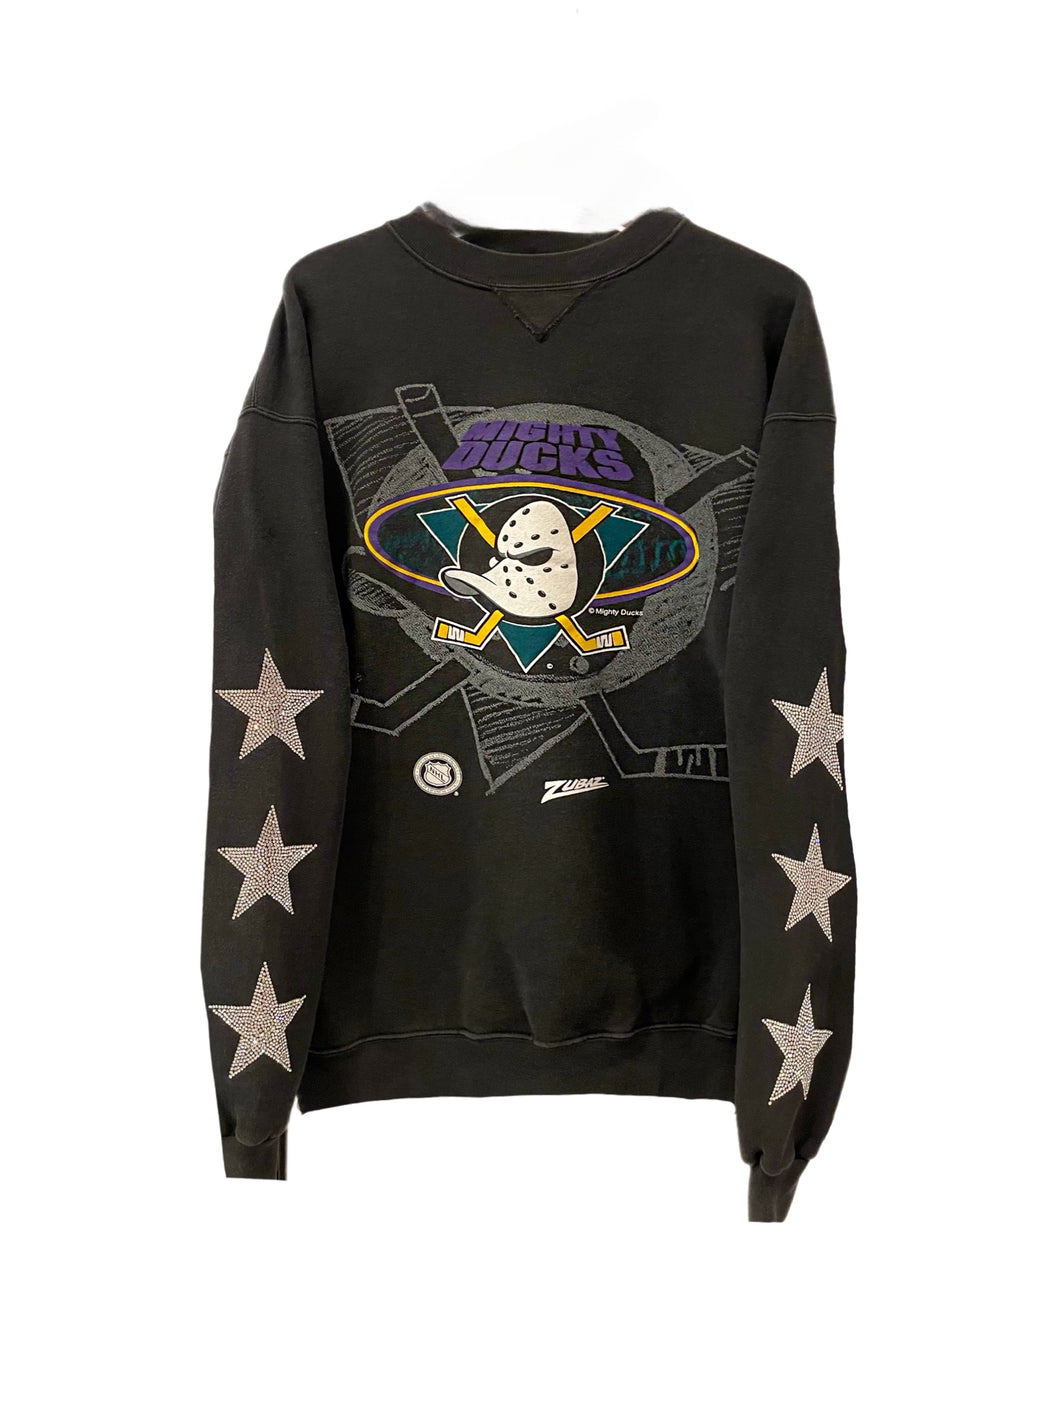 Anaheim Ducks, NHL One of a KIND Vintage Mighty Ducks “Rare Find” Sweatshirt with Three Crystal Star Design.